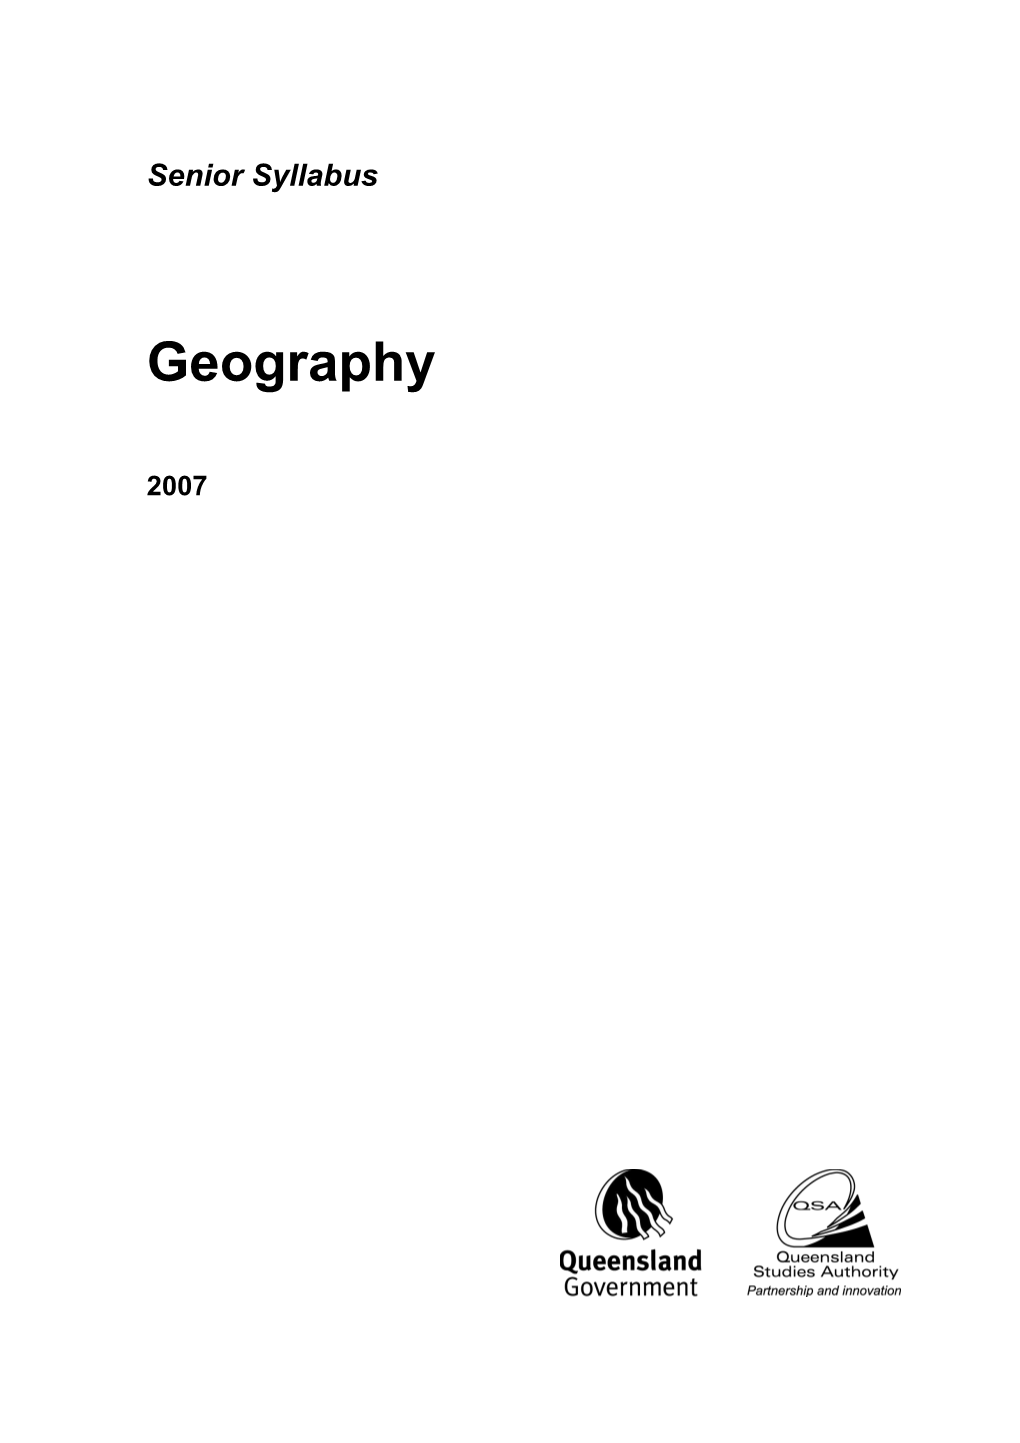 Geography (2007) Senior Syllabus